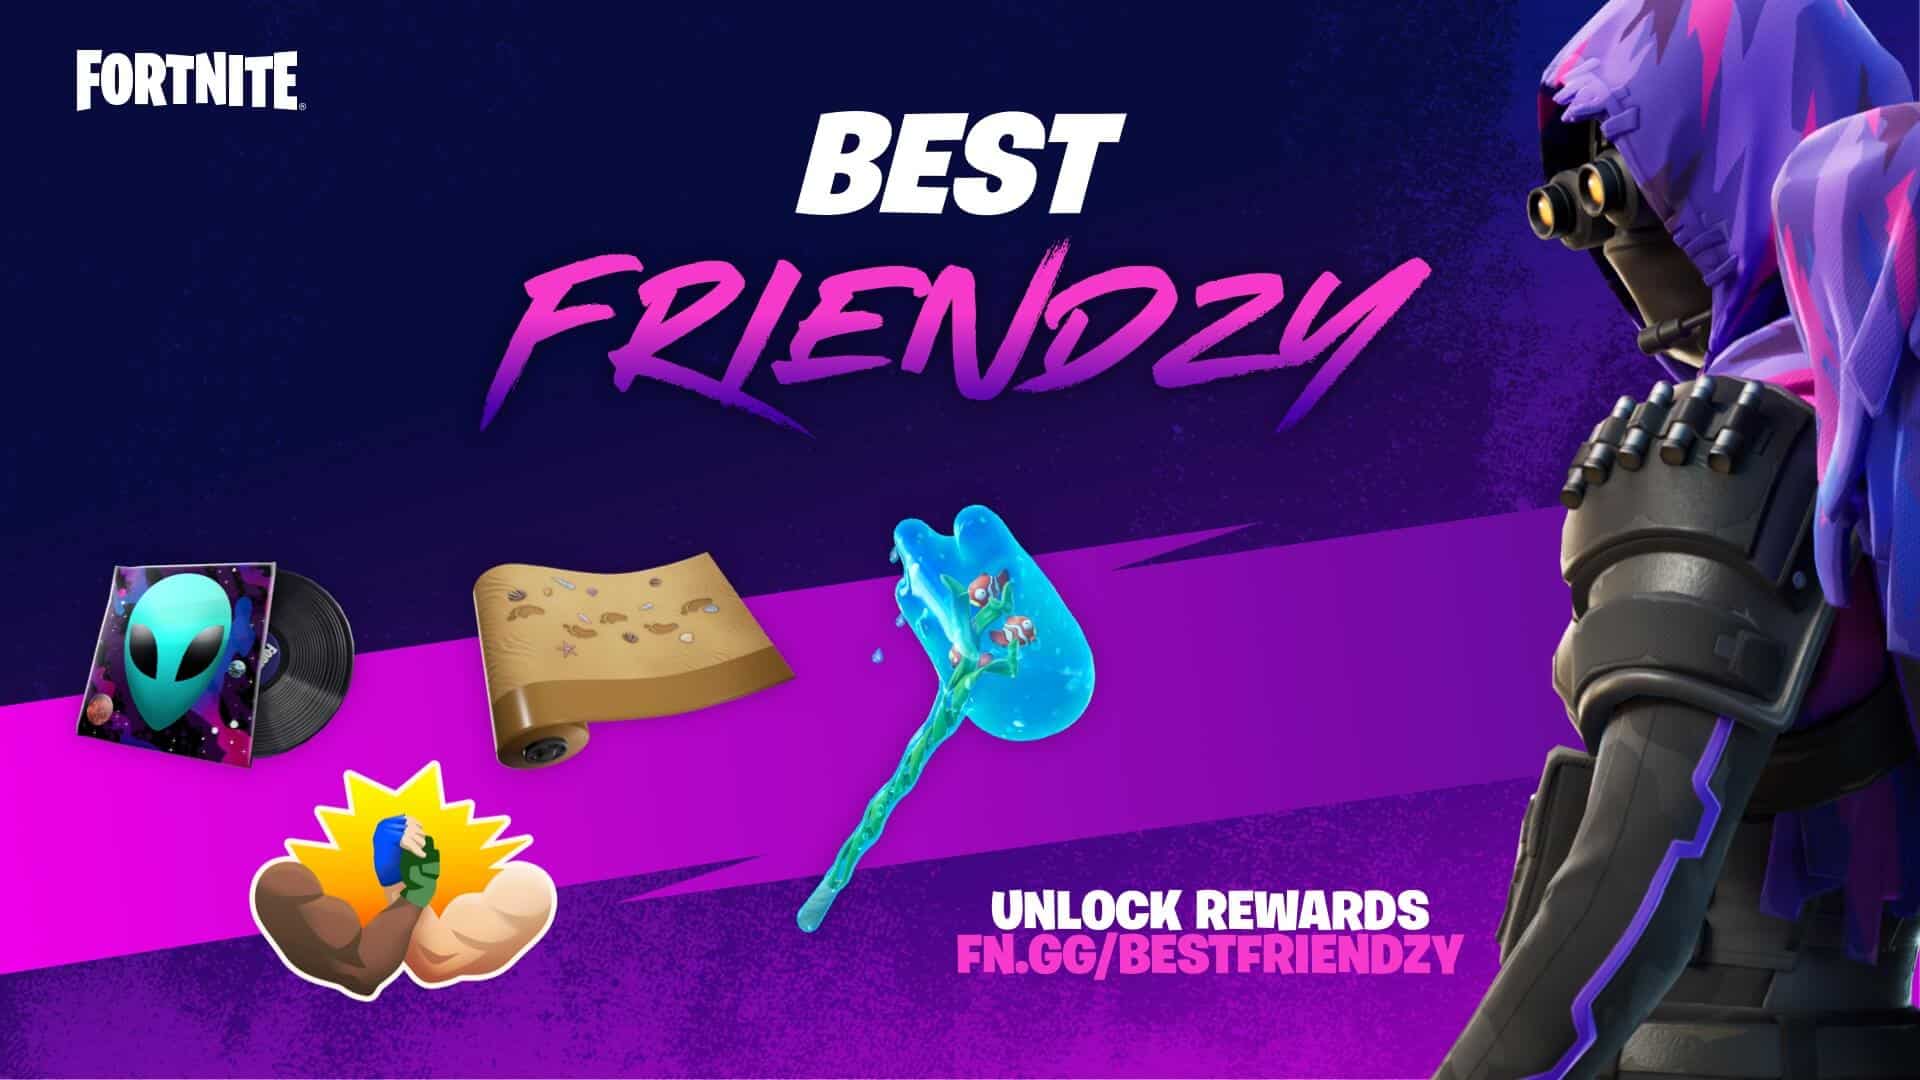 Fortnite Best Freindzy Rewards 2